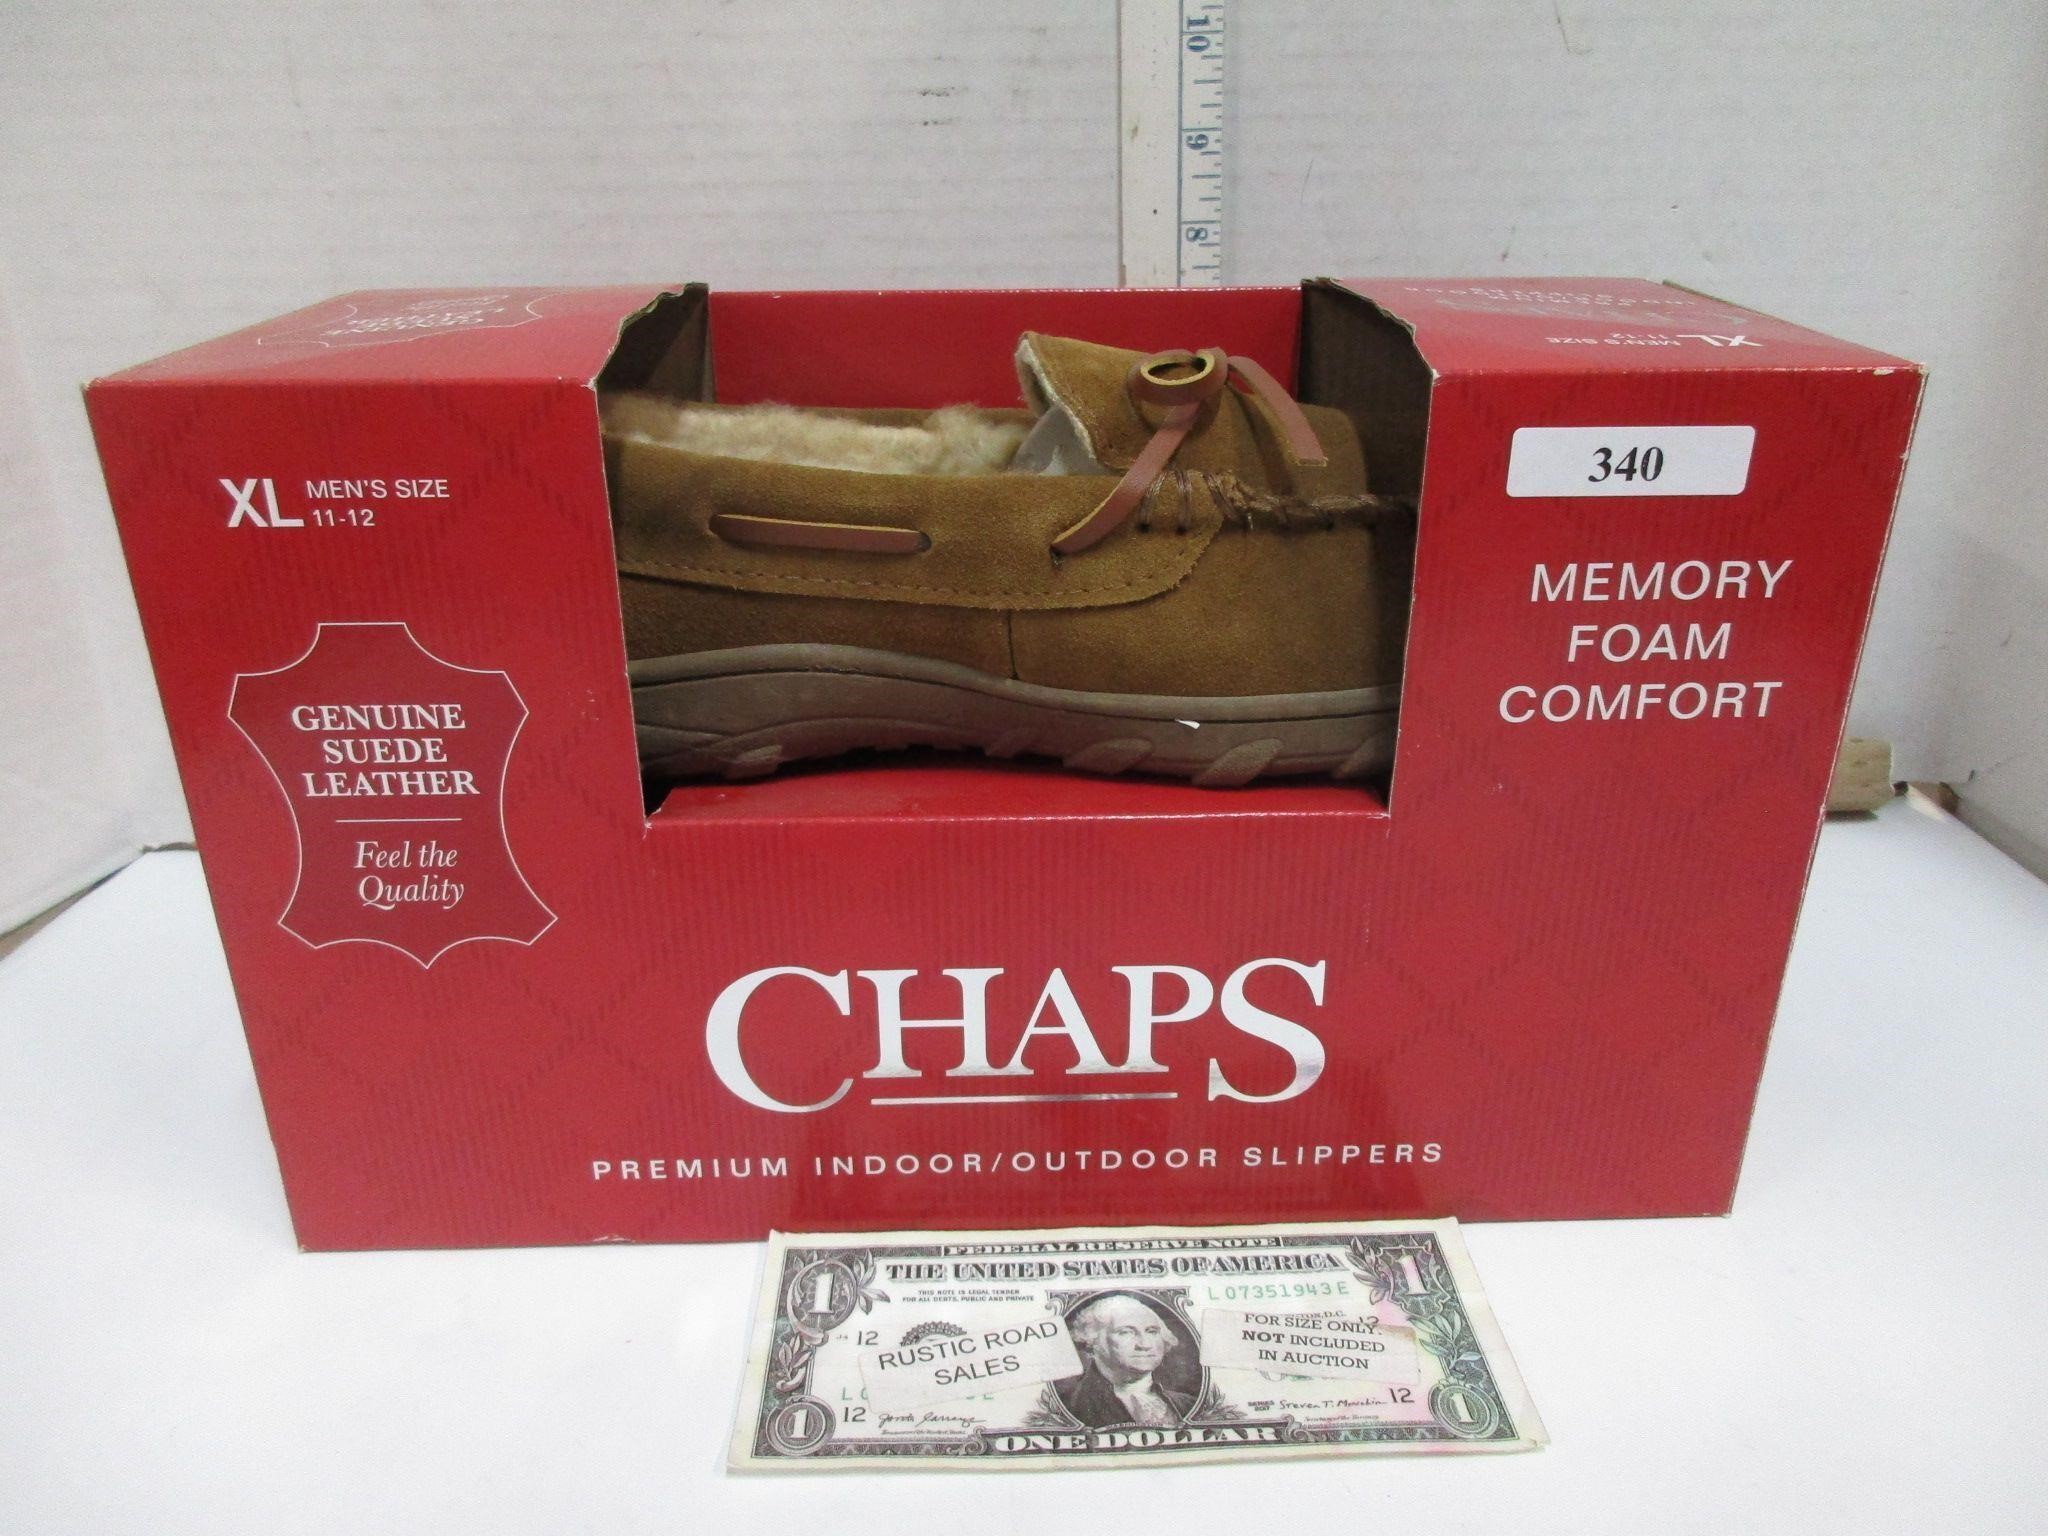 Men's CHAPS Slippers - Size: XL 11-12